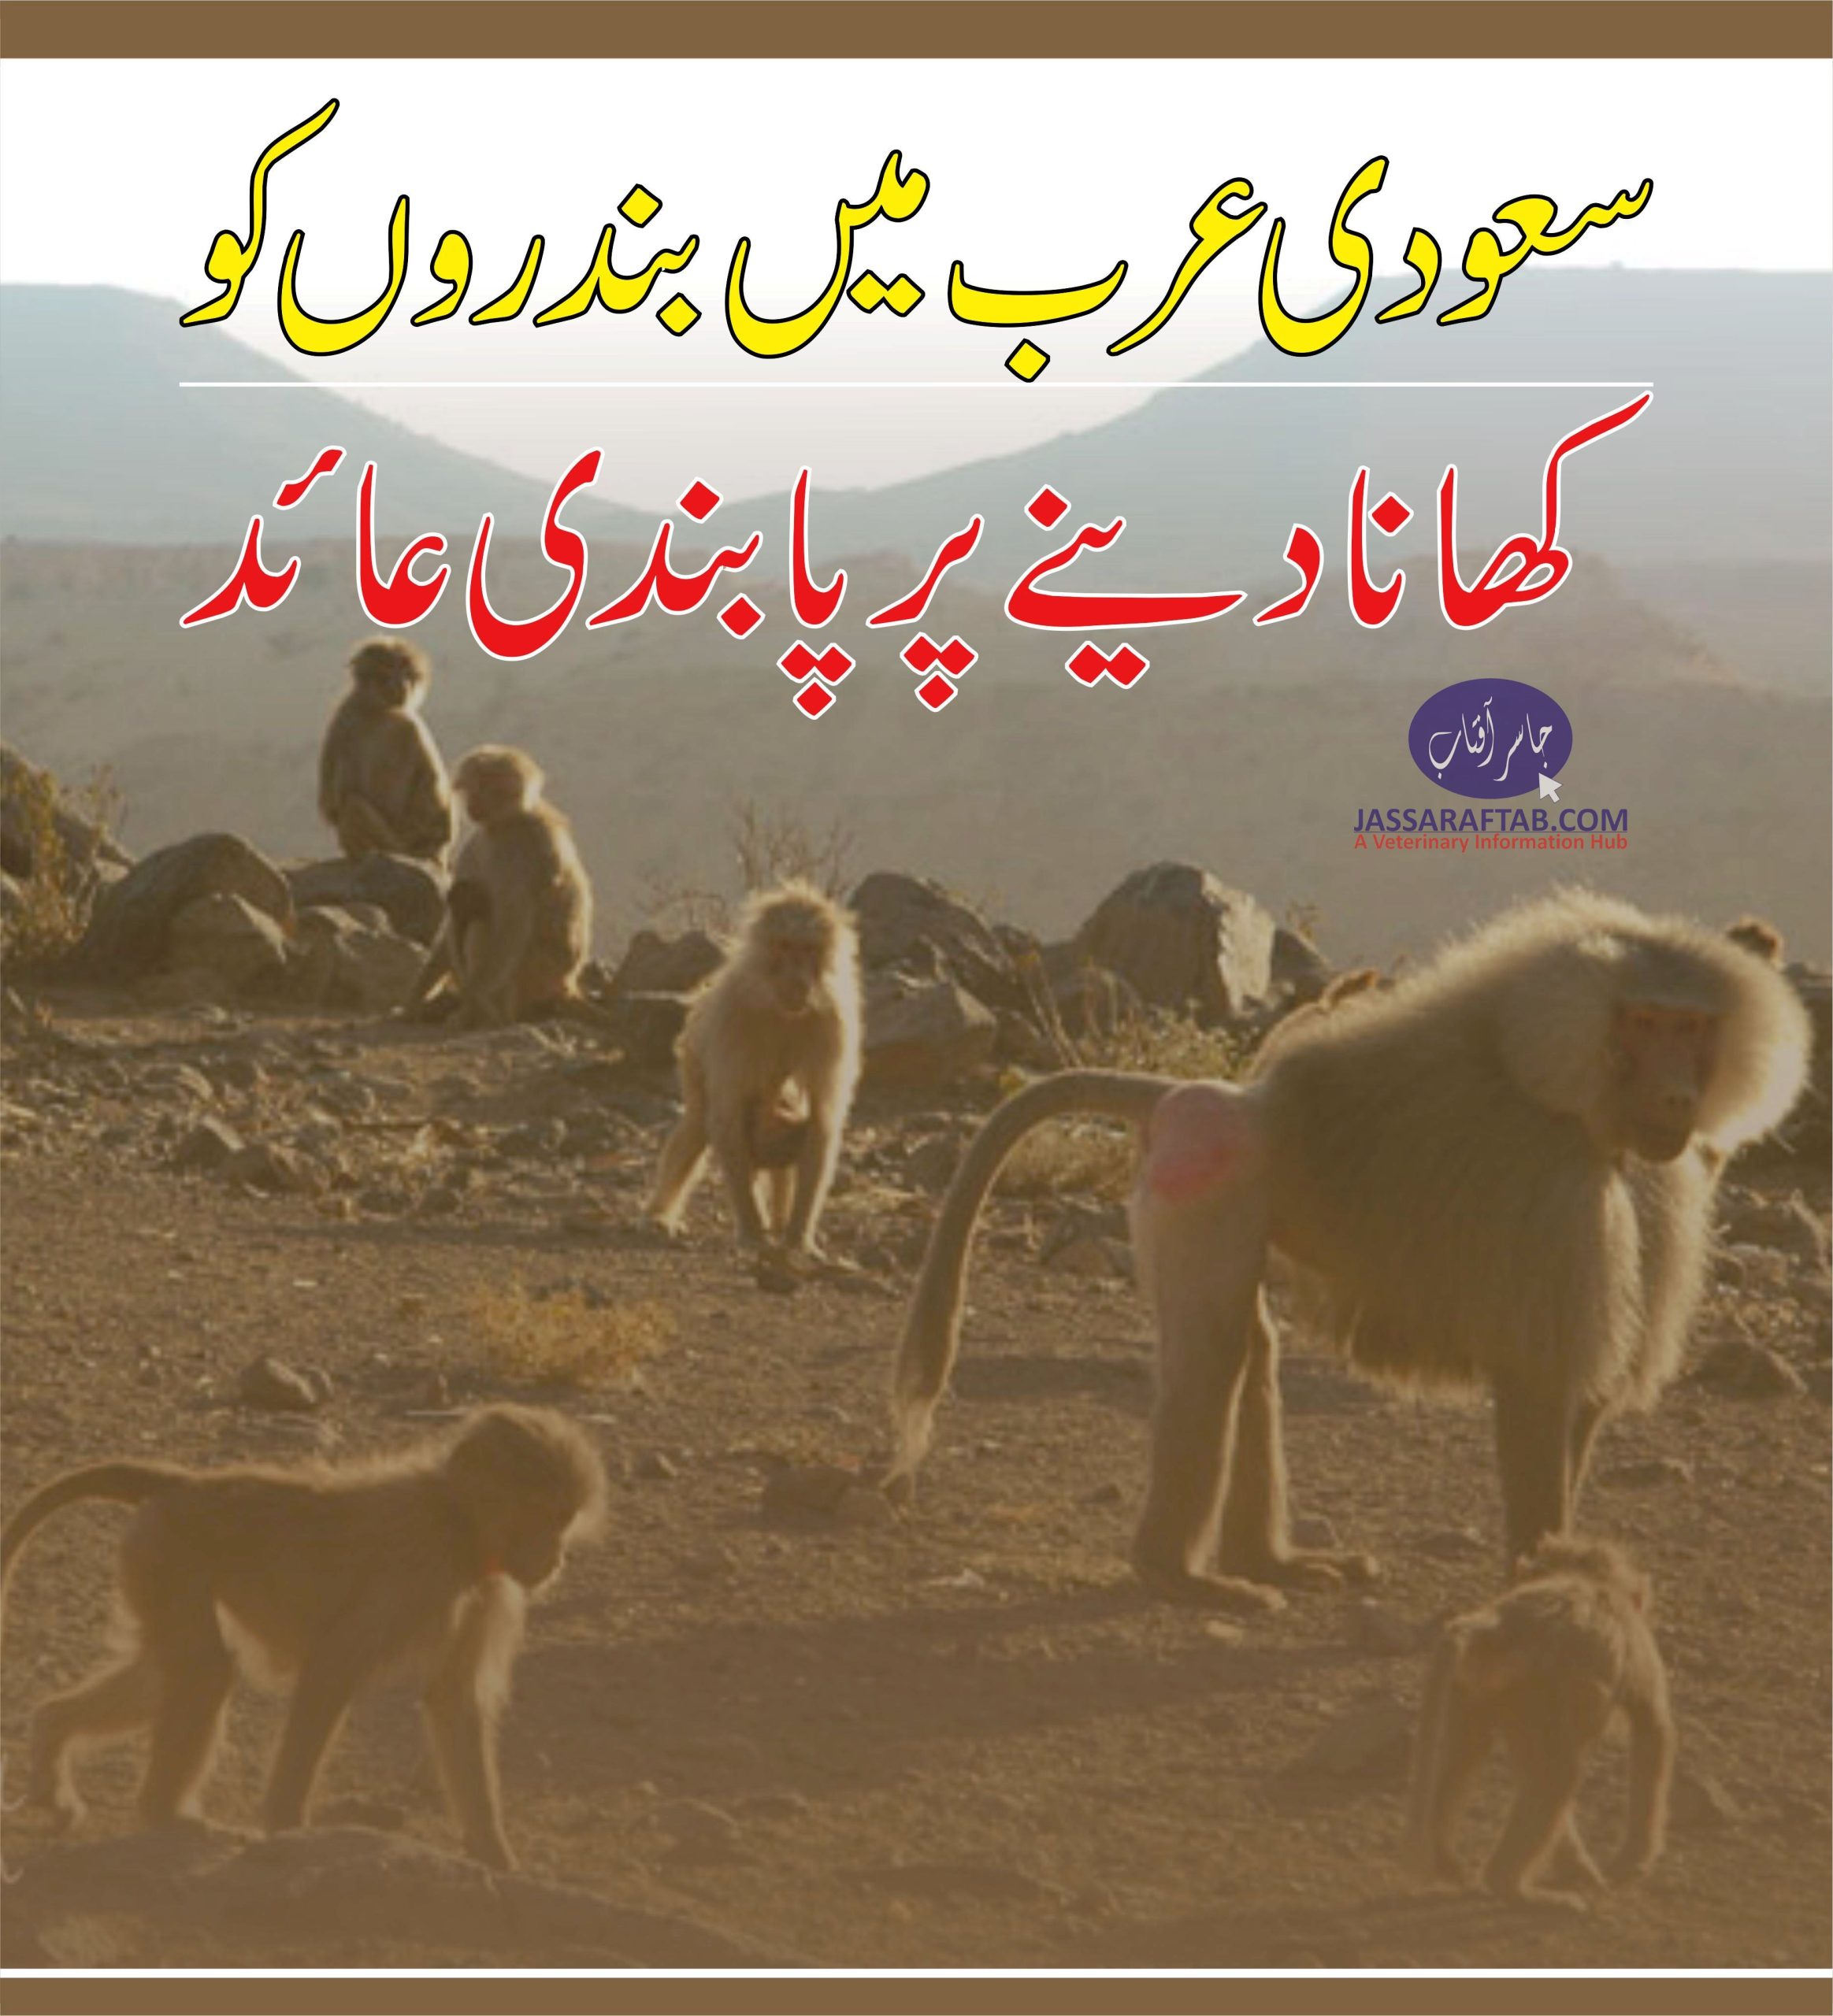 Fine for feeding baboons Monkey in Saudi Arabia